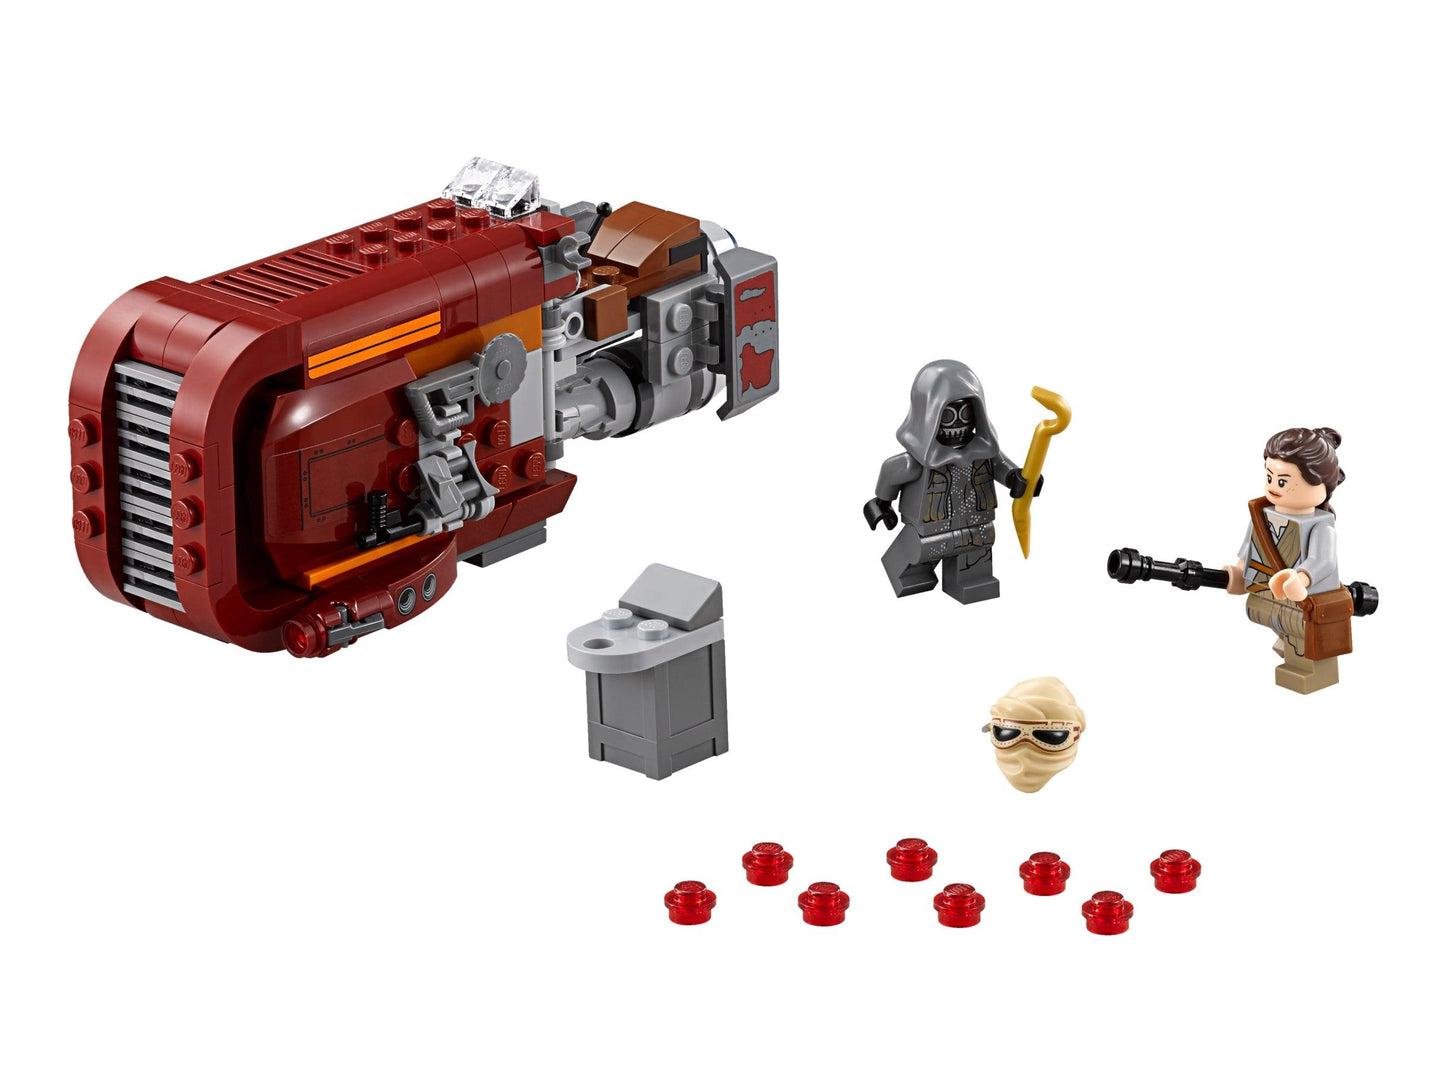 LEGO Rey's Speeder uit The Force Awakens 75099 StarWars | 2TTOYS ✓ Official shop<br>